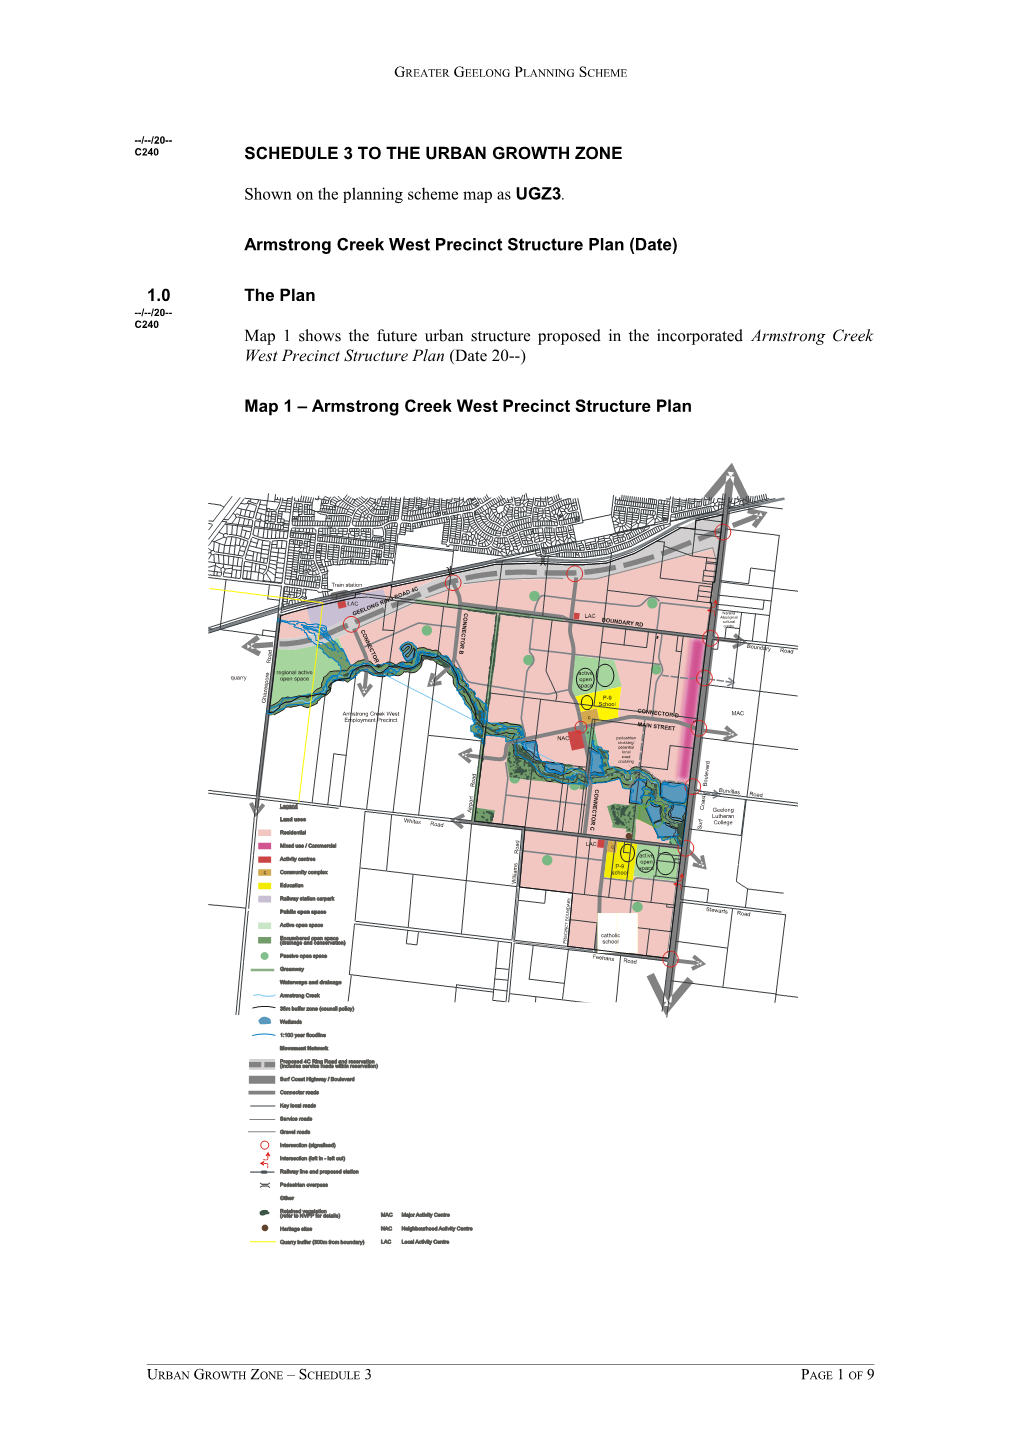 Armstrong Creek West Precinct Structure Plan (Date)